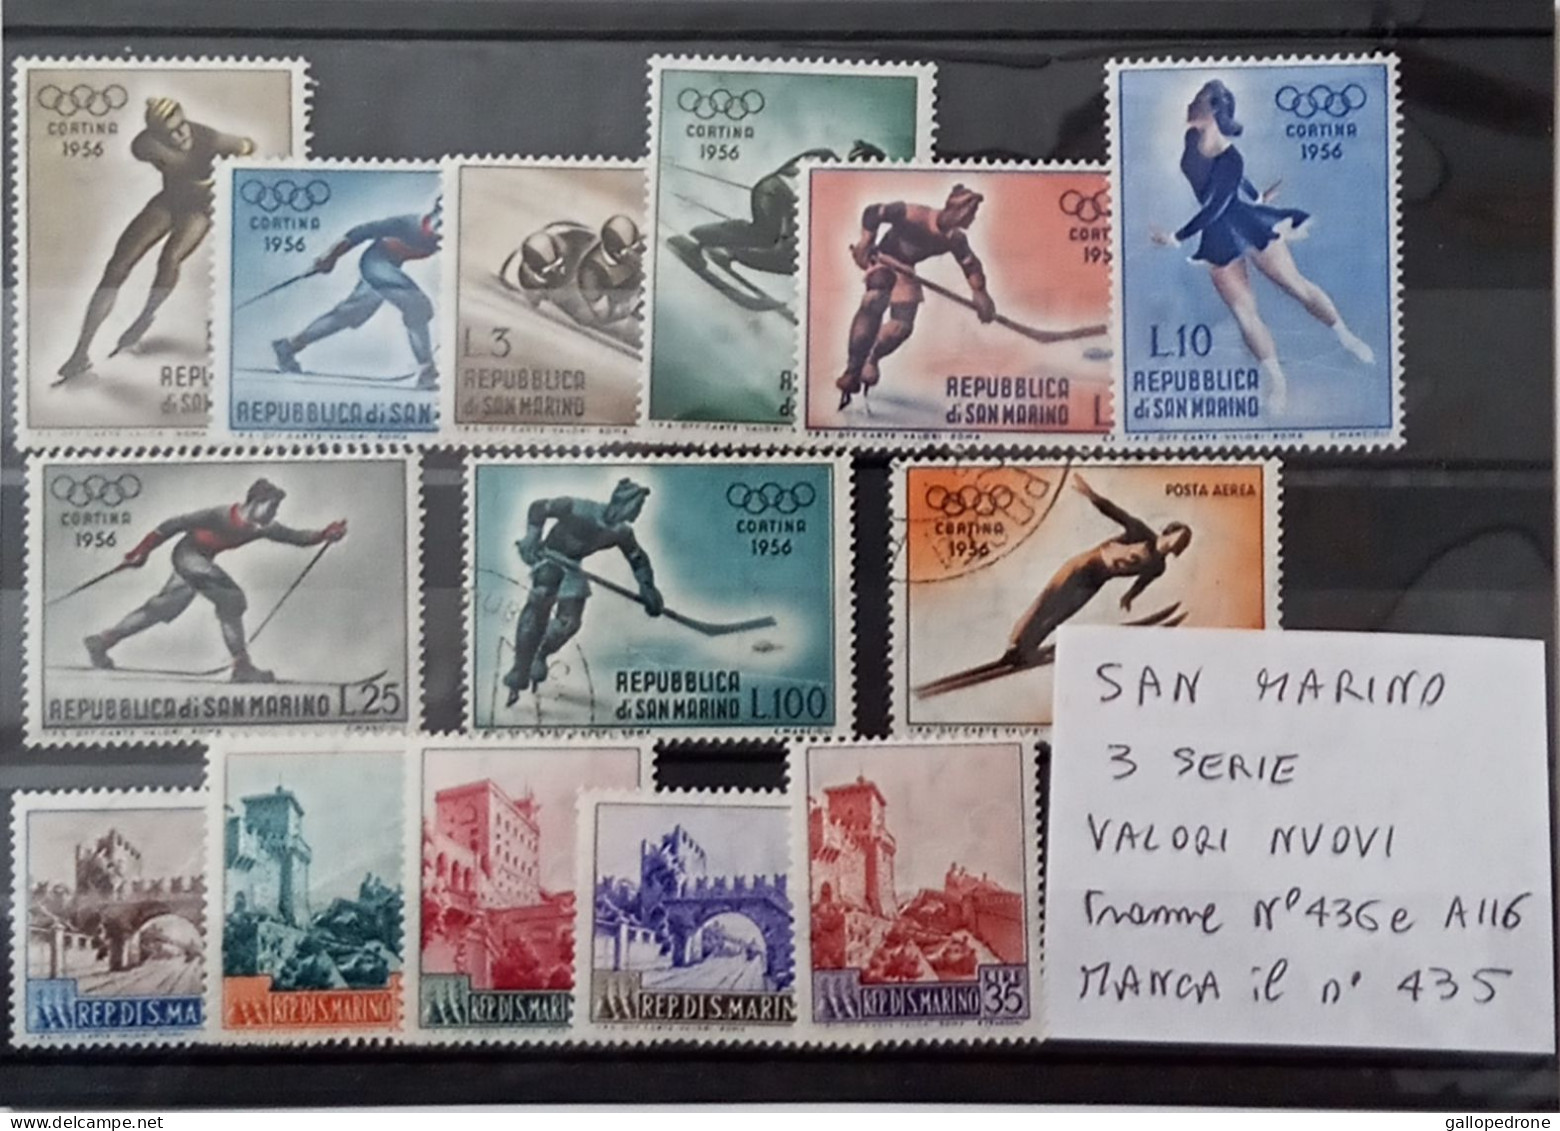 1955 San Marino, 13 Valori-3 Serie Francobolli Tranne N. 436, A116. Manca N. 435. Nuovi E Usati - Used Stamps